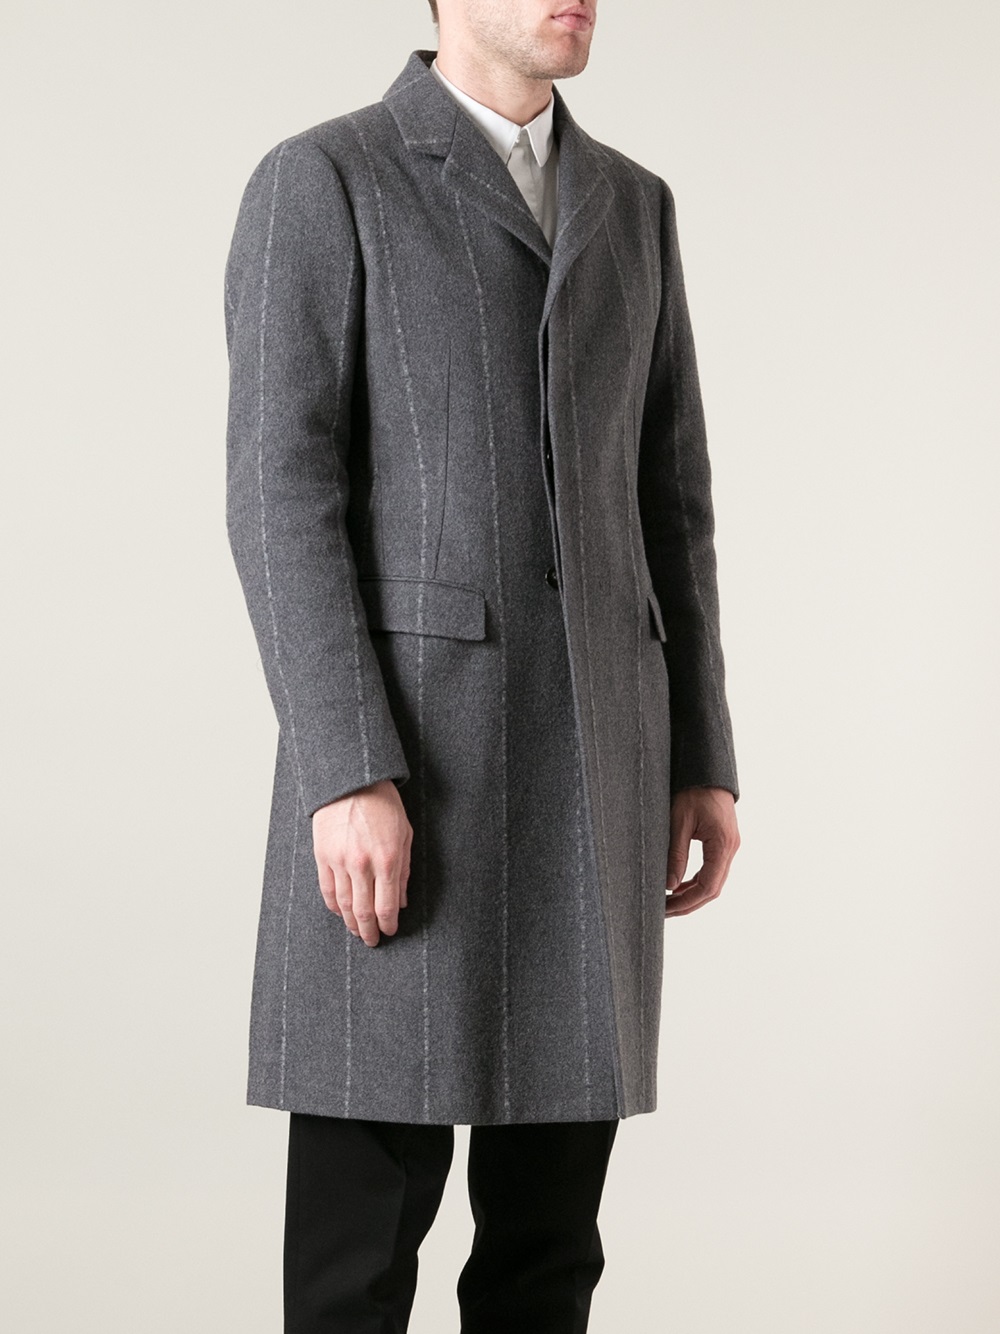 Jil Sander Chalk Stripe Overcoat in Grey (Gray) for Men - Lyst